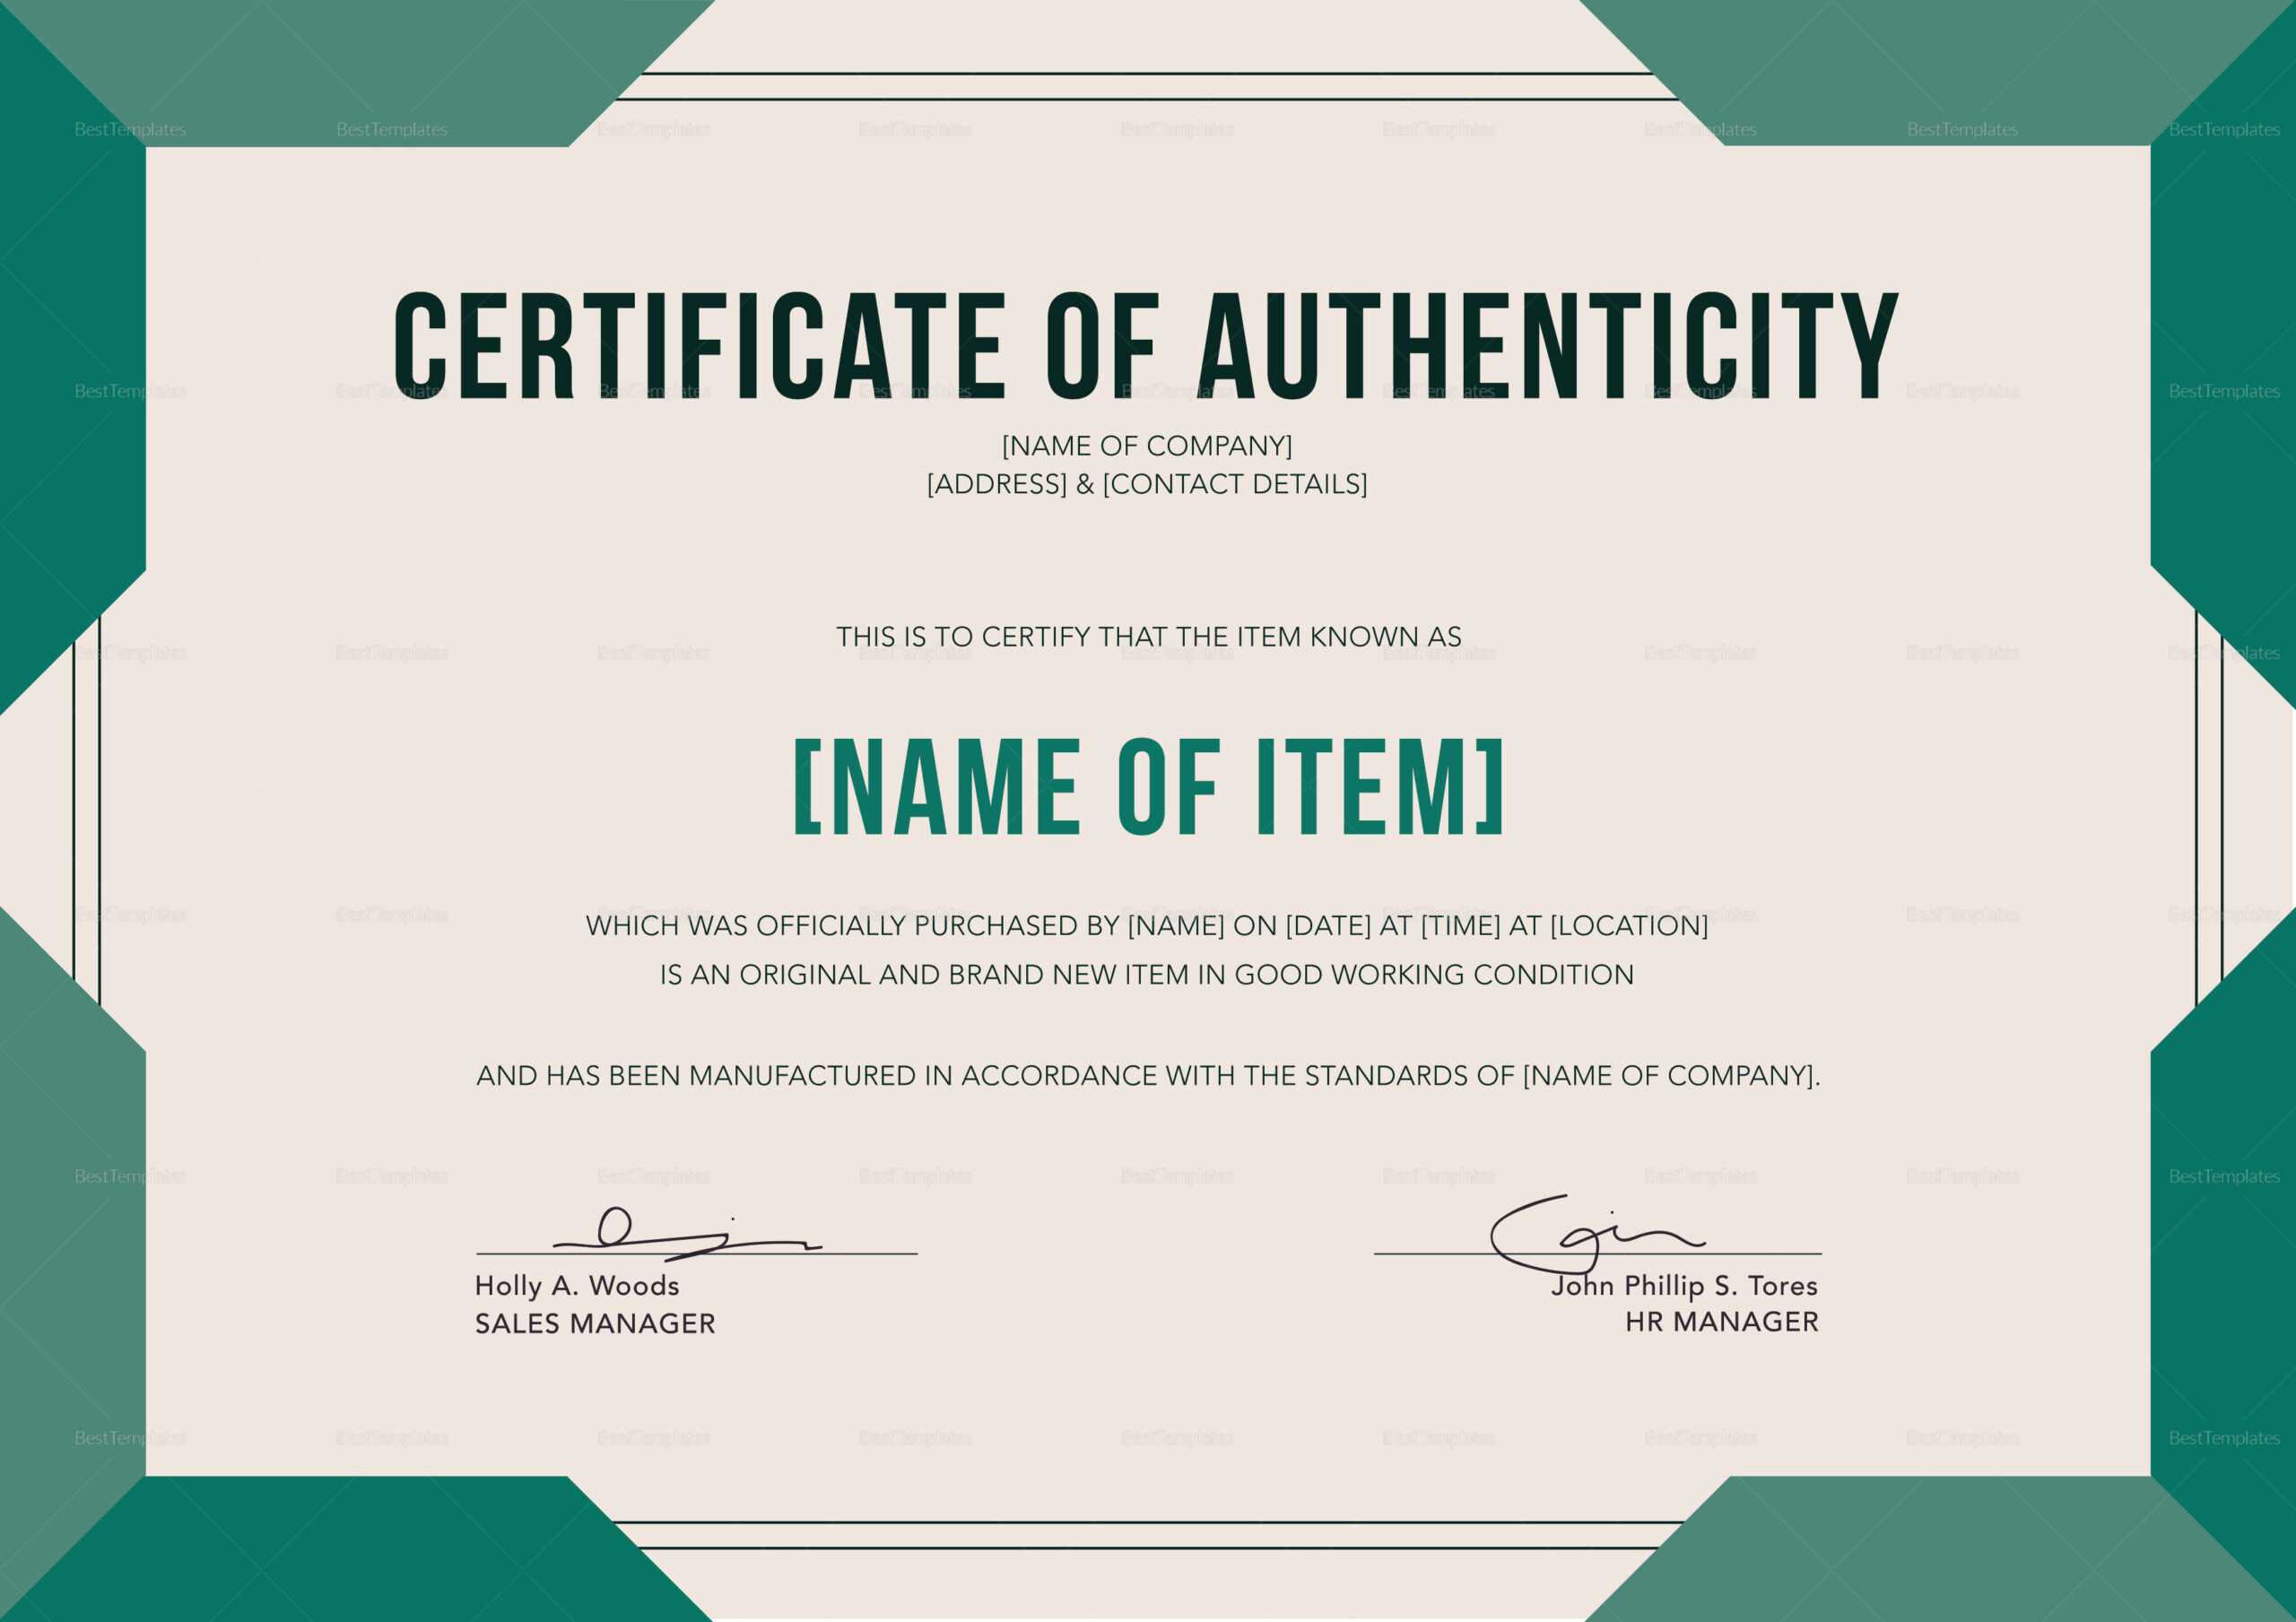 Elegant Certificate Of Authenticity Template Throughout Certificate Of Authenticity Template